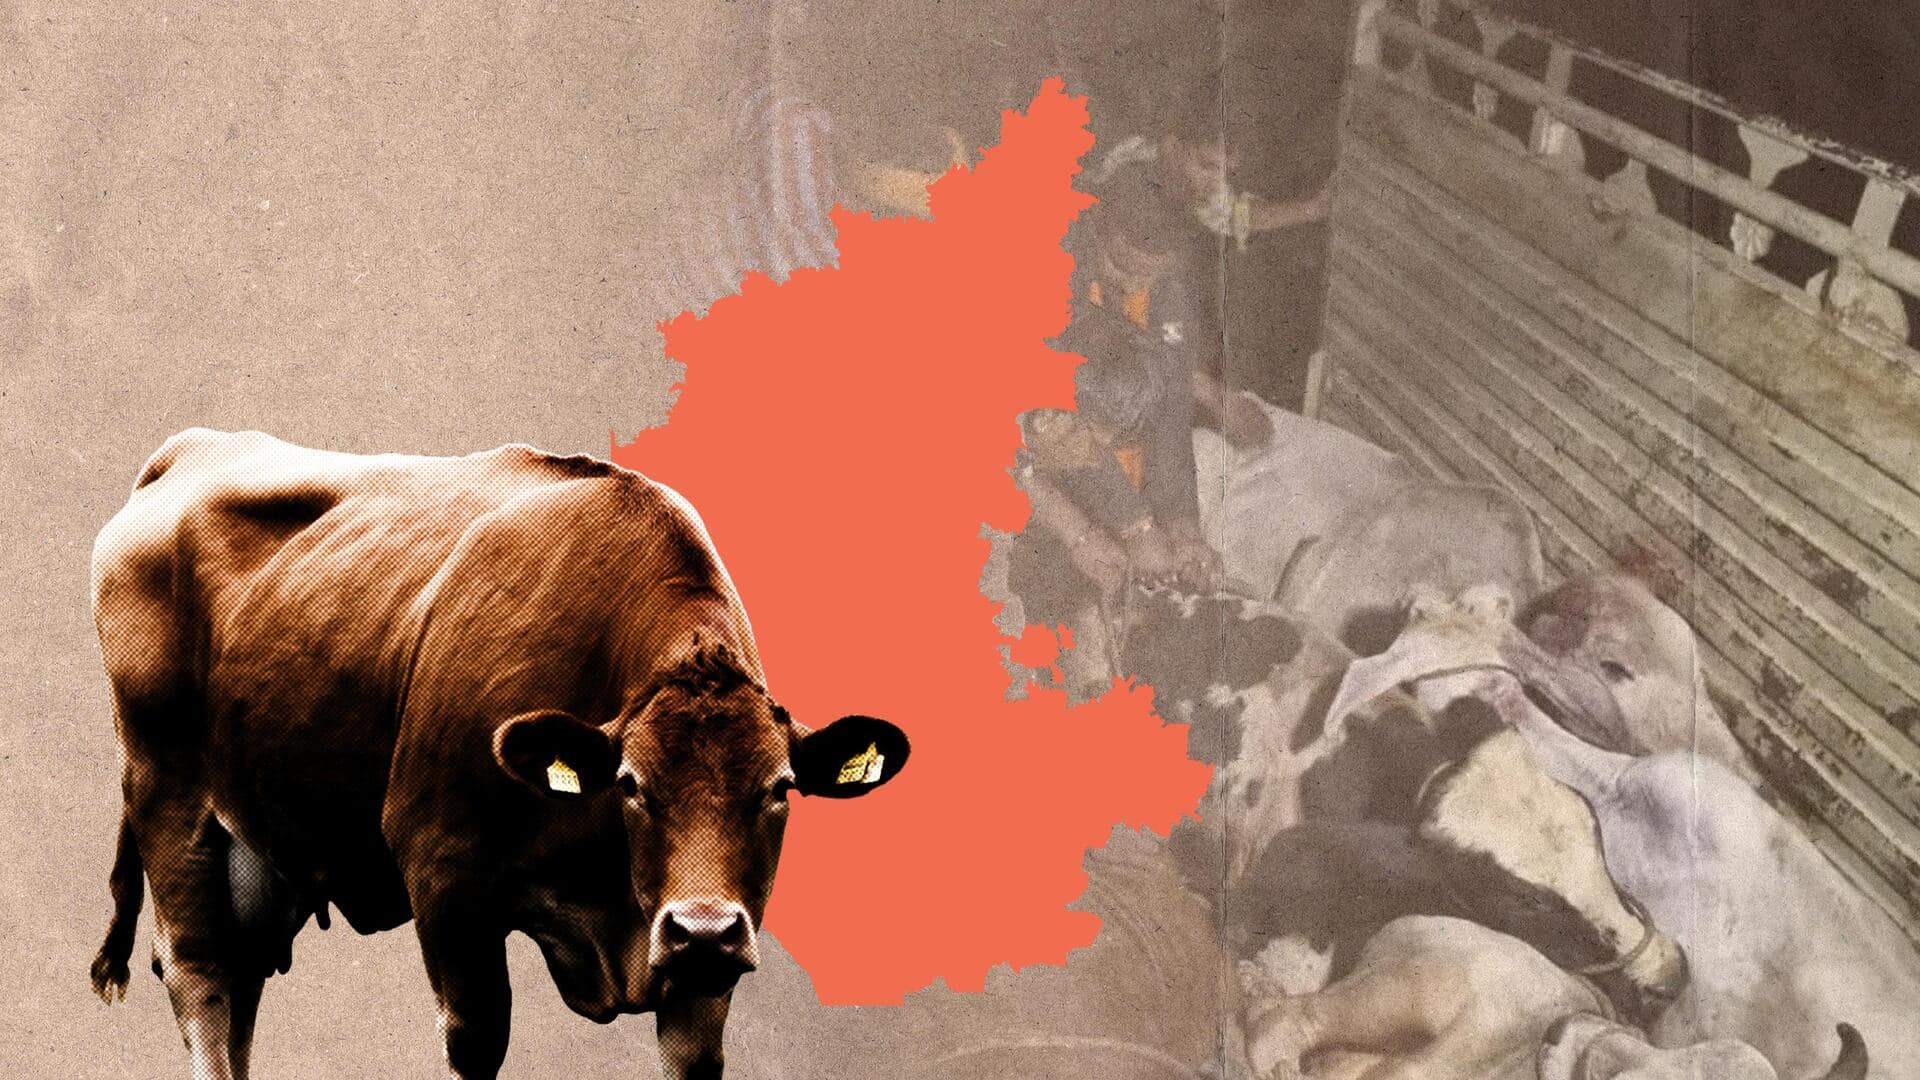 Karnataka: Congress warns against cow vigilantism, VHP cites 'Hindus' feelings'